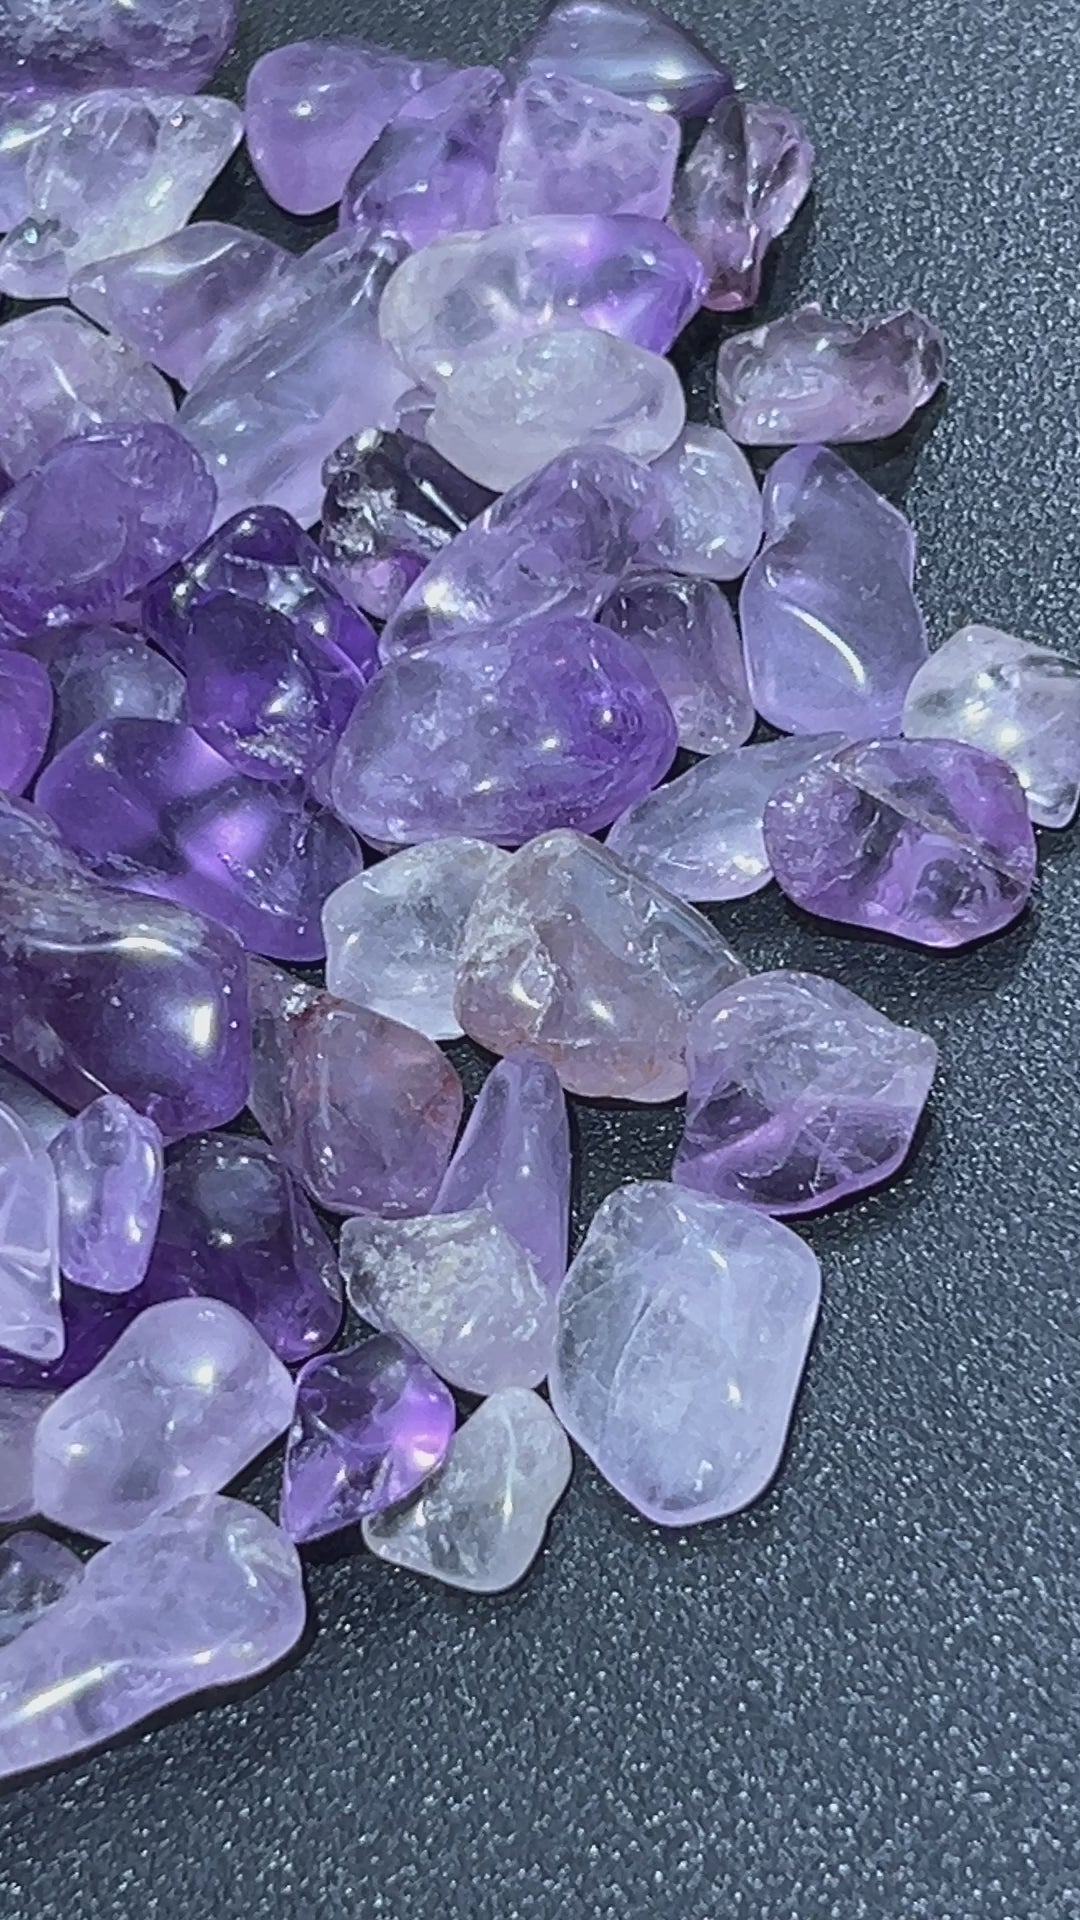 Amethyst Crystal Tumbled Small Chips (1/2 lb) 8 oz Bulk Wholesale Lot Half Pound Stones Gemstones